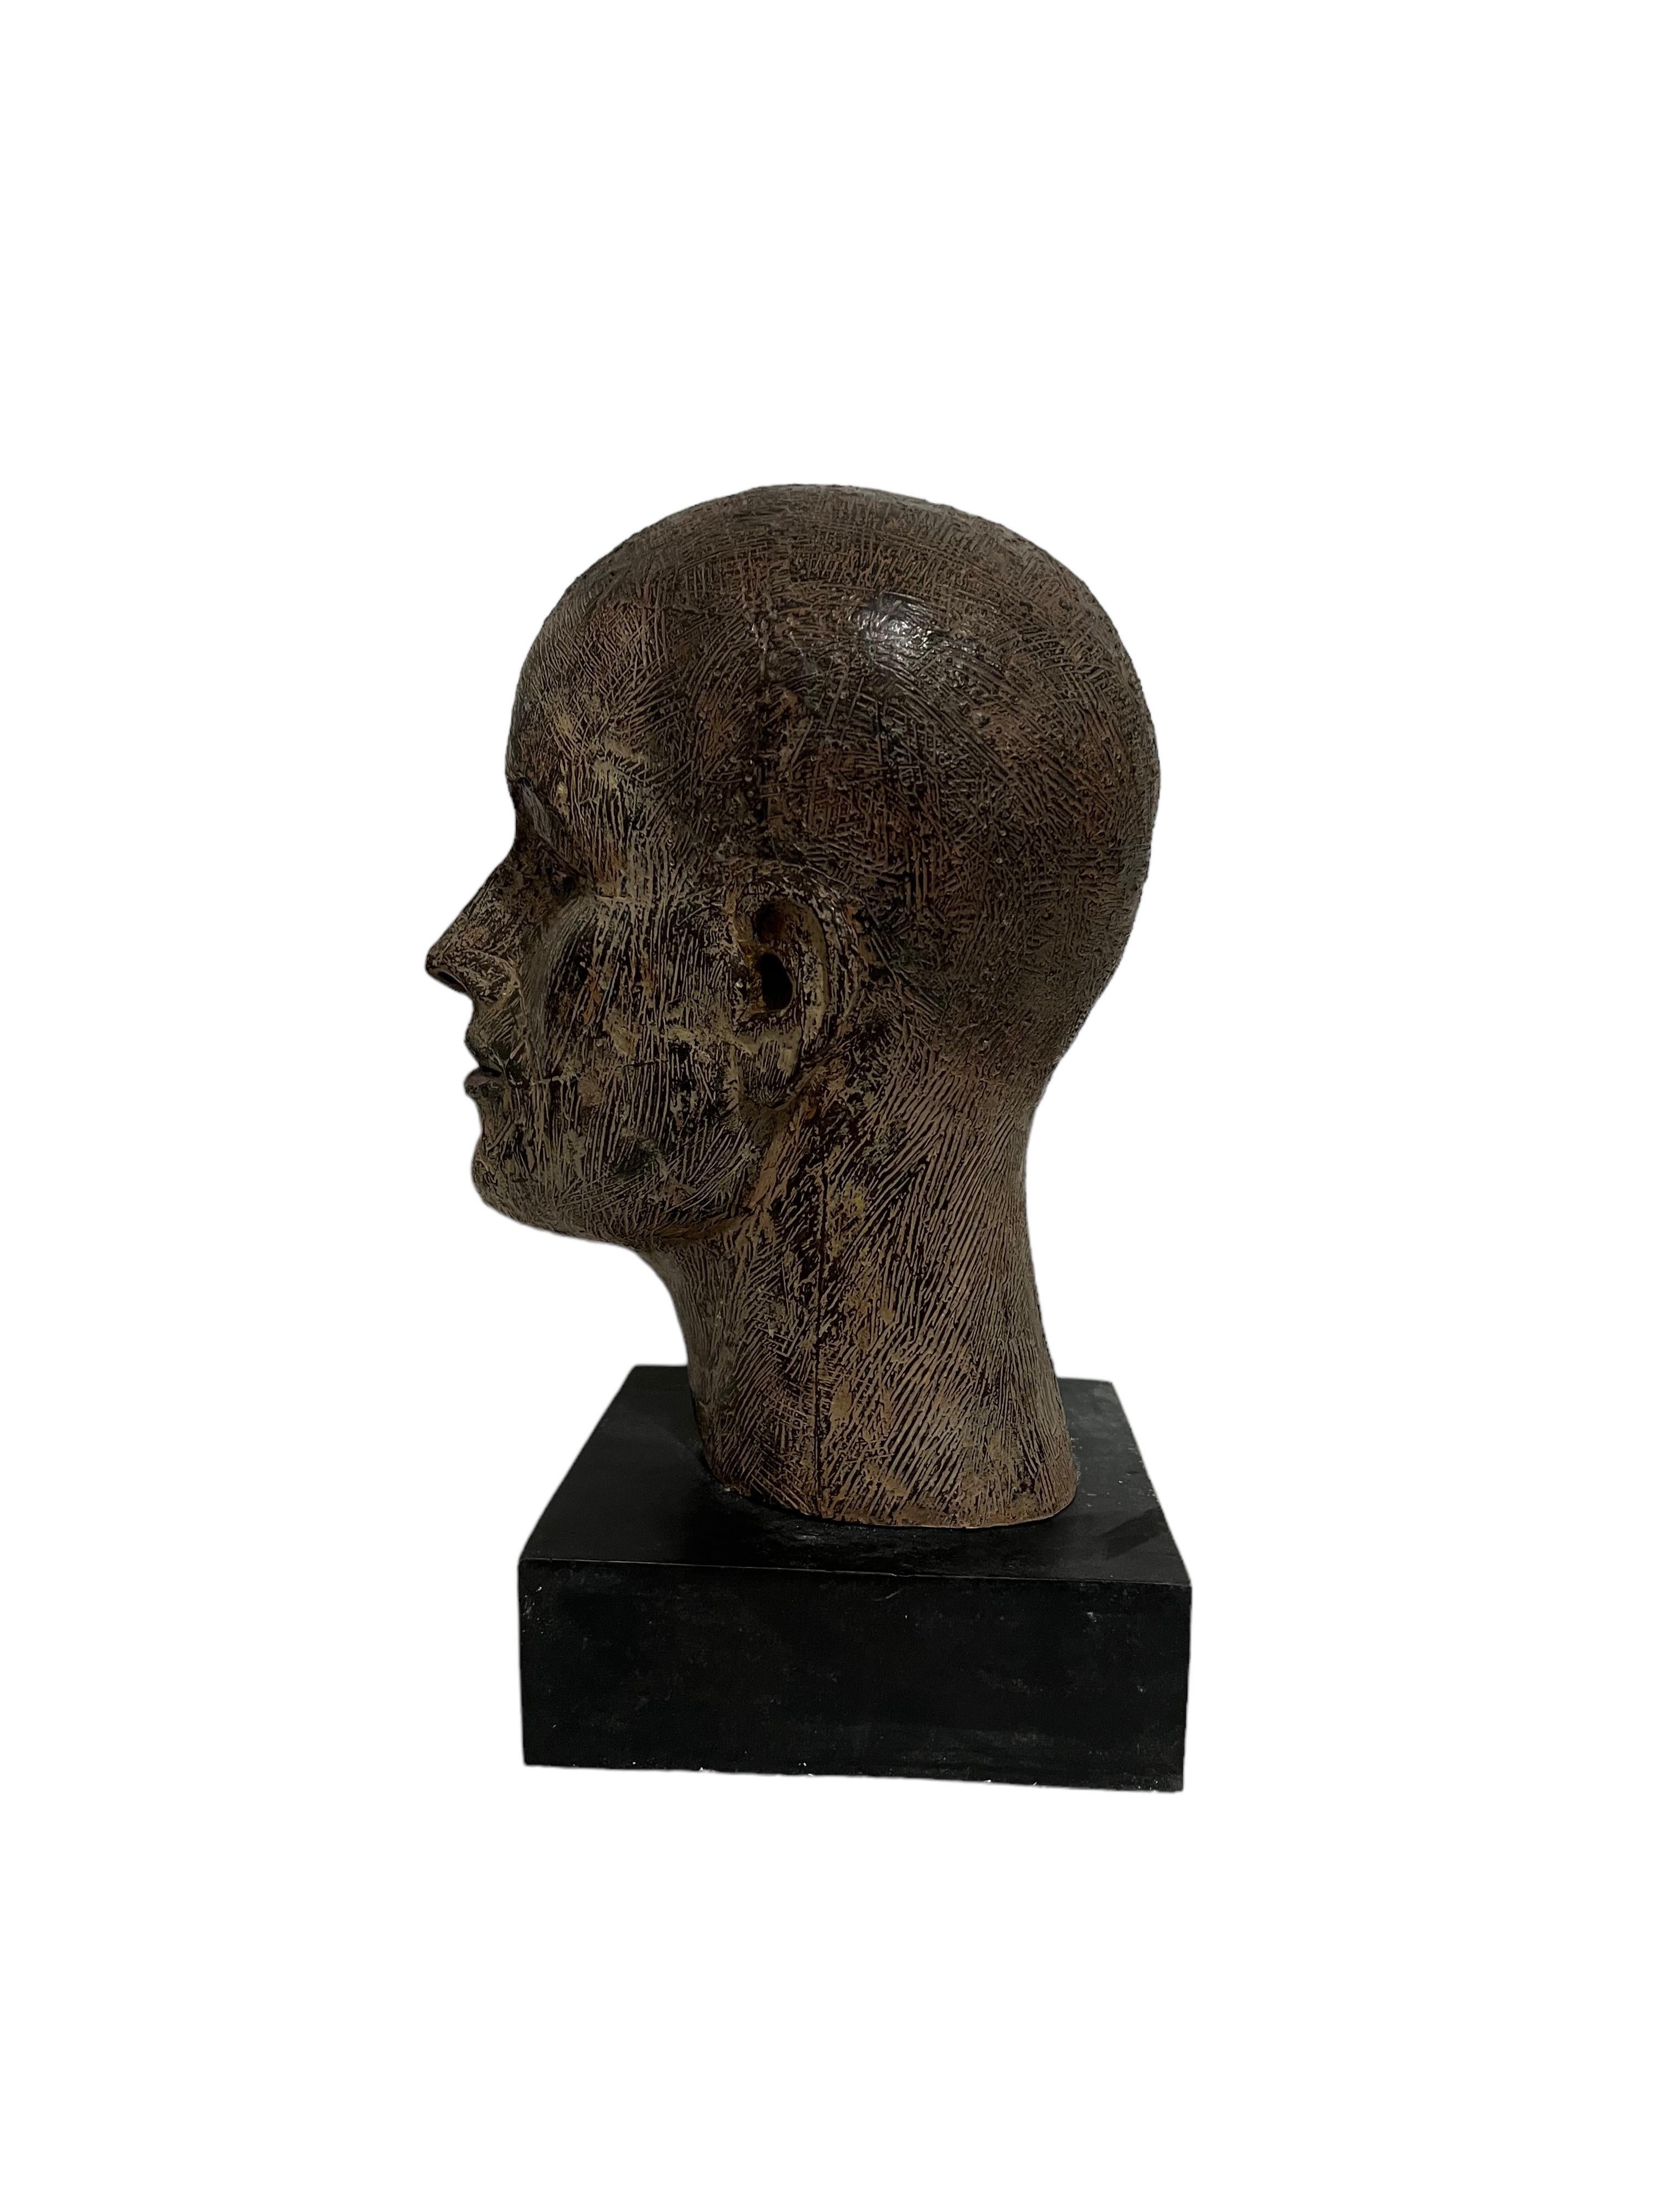 Rare Cast Painted Bronze Head Sculpture British Realist Sculptor John Davies For Sale 12